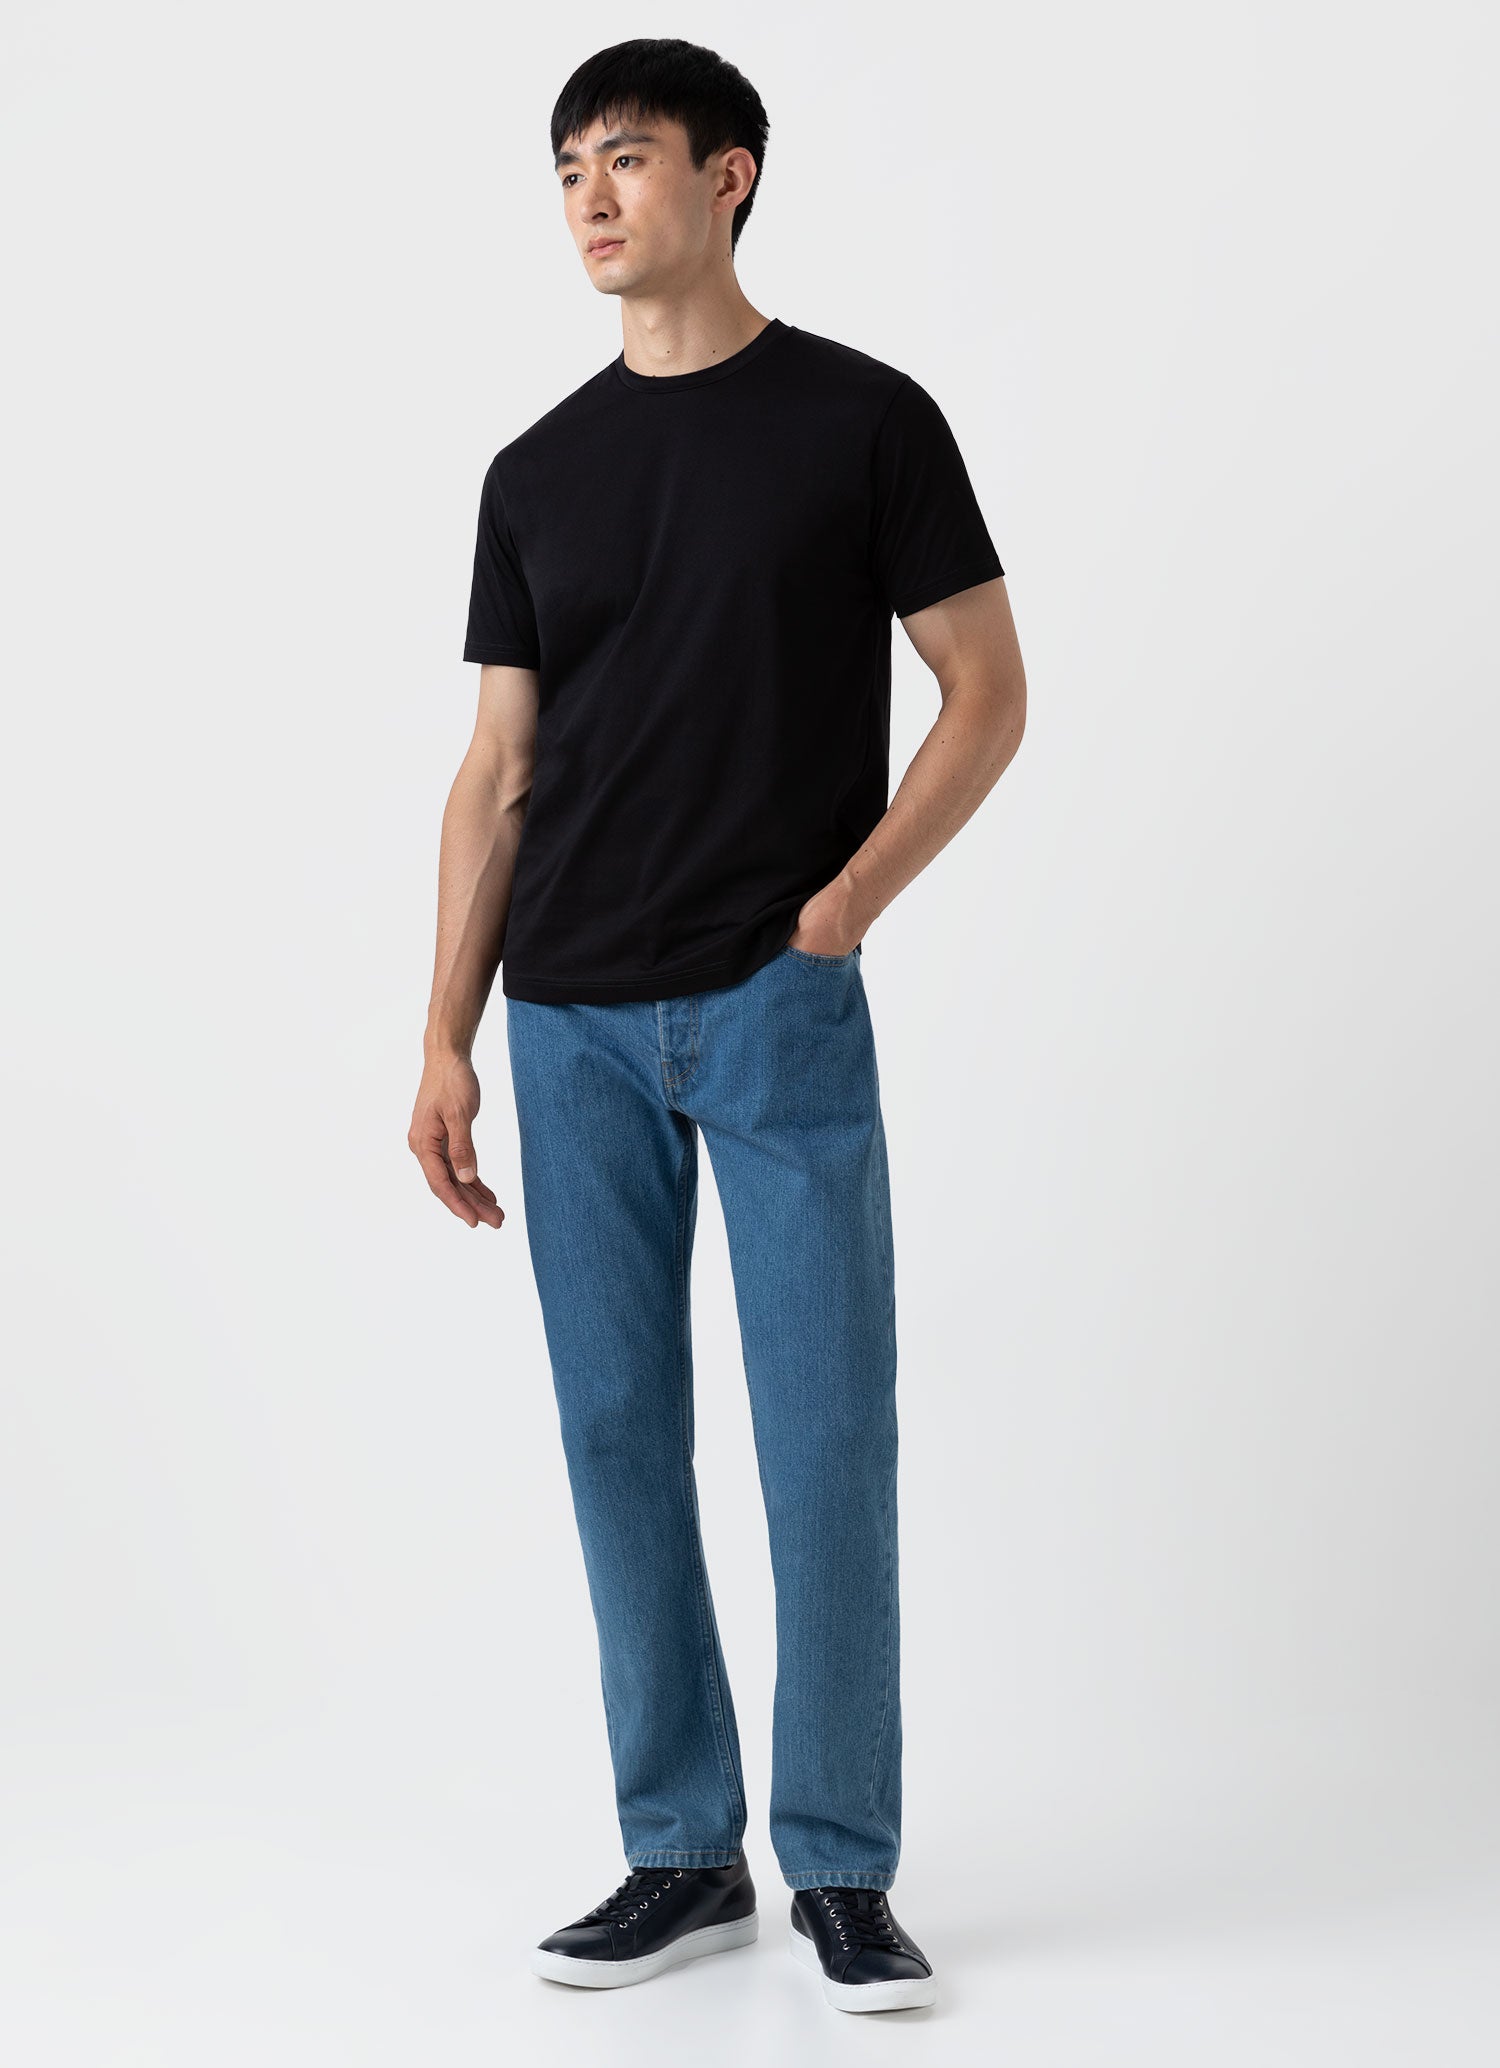 Men's Slim Fit Jeans in Mid Wash Denim